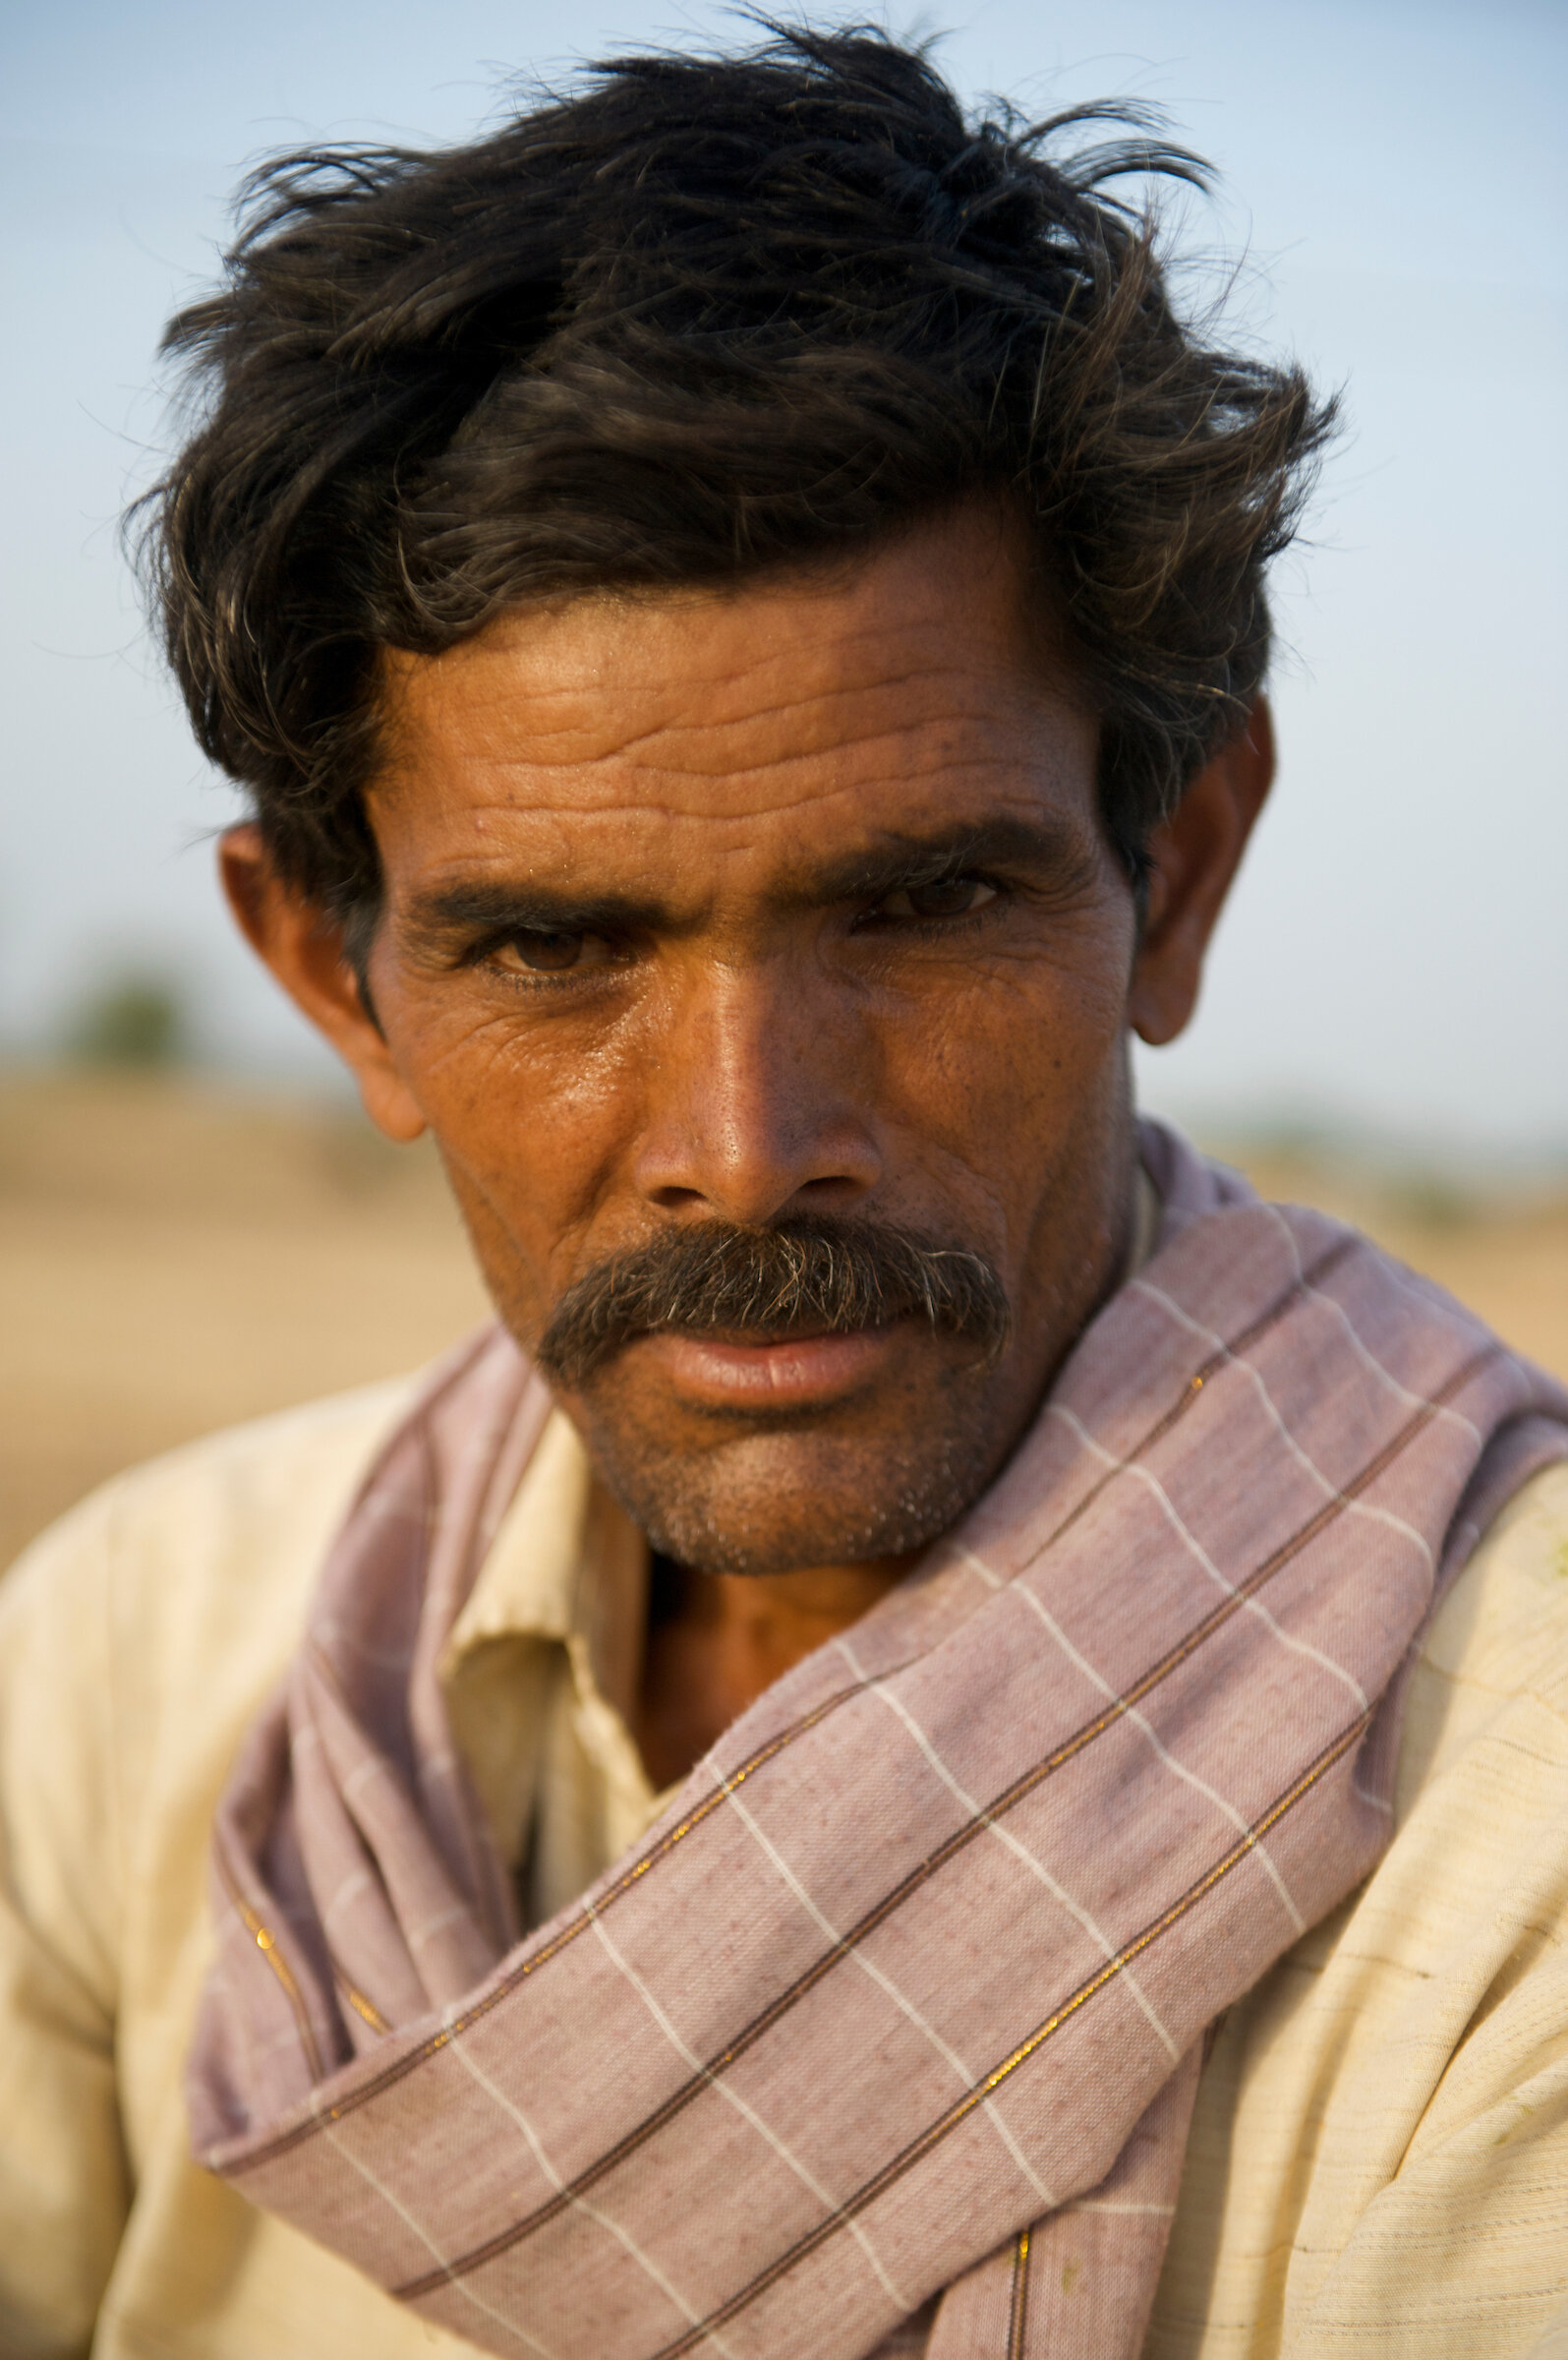  Farmer - Barundhan, India 